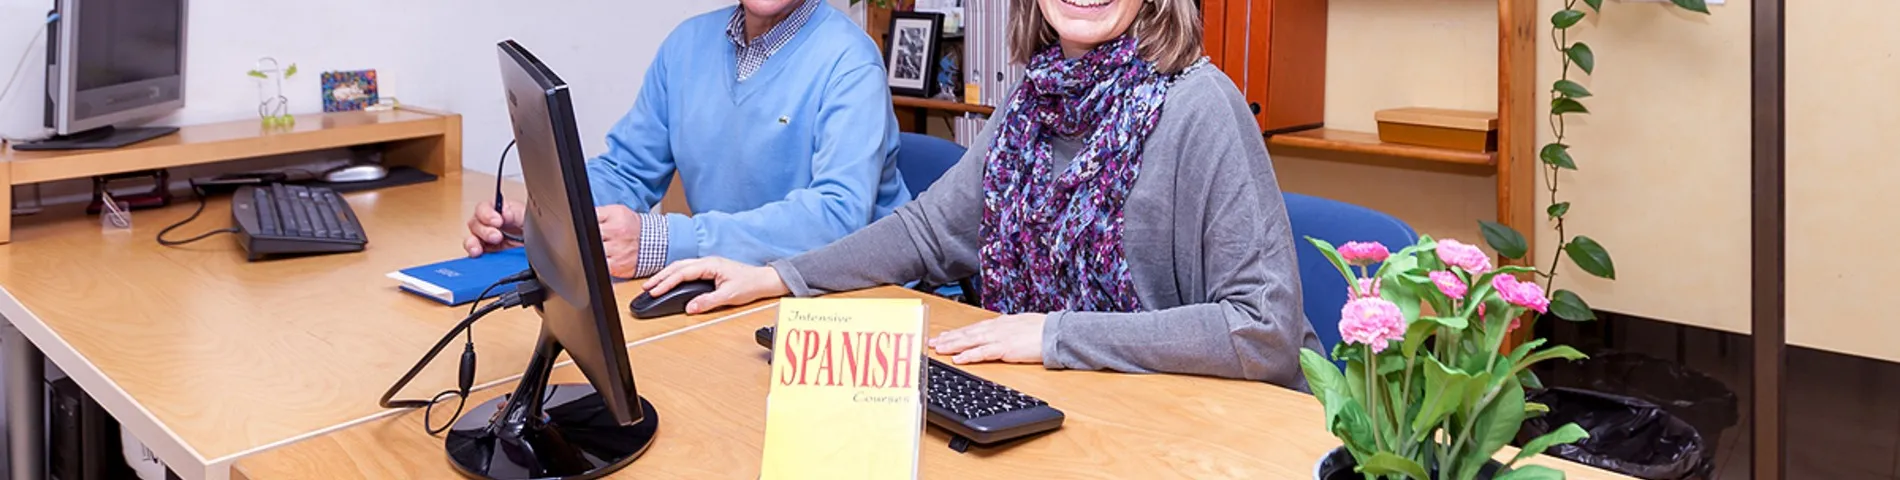 Hola Spanish Courses afbeelding 1